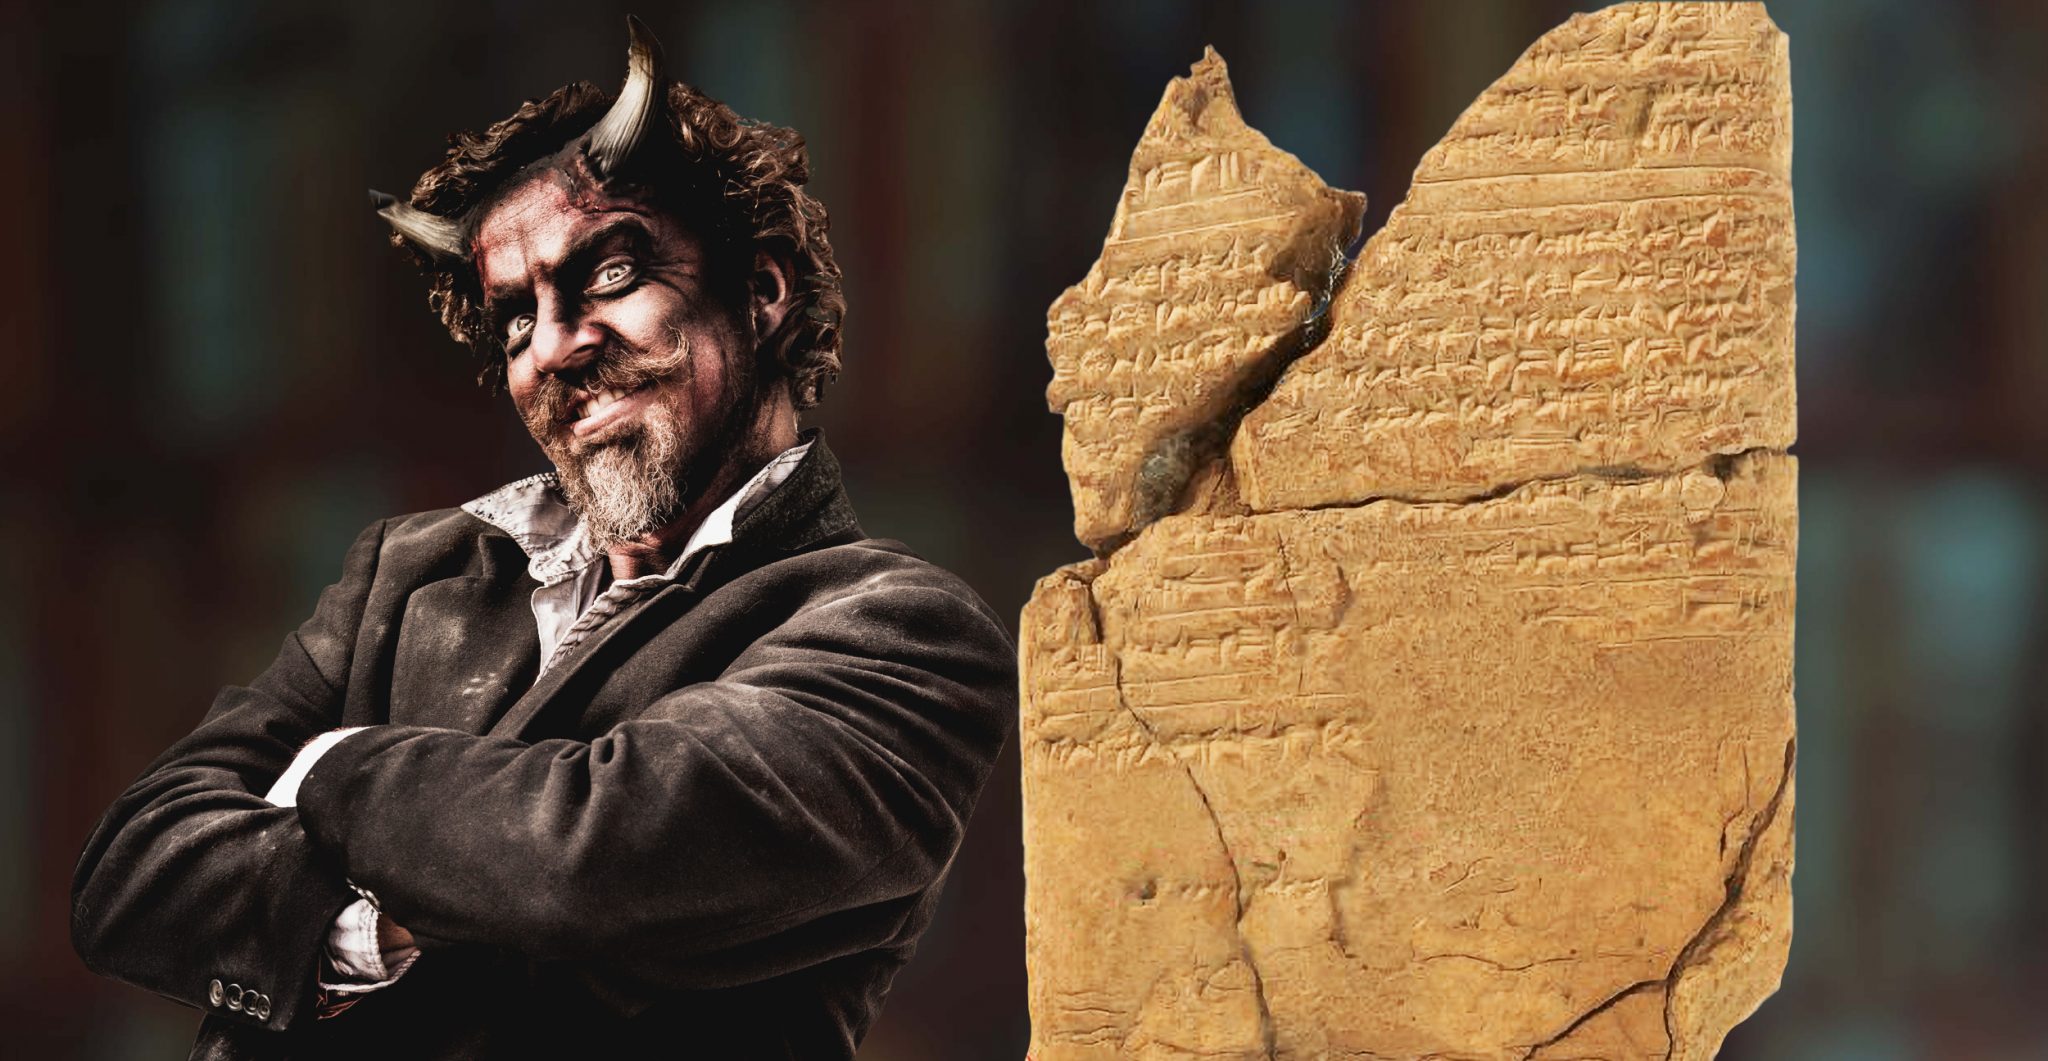 Assyrian demon tablet